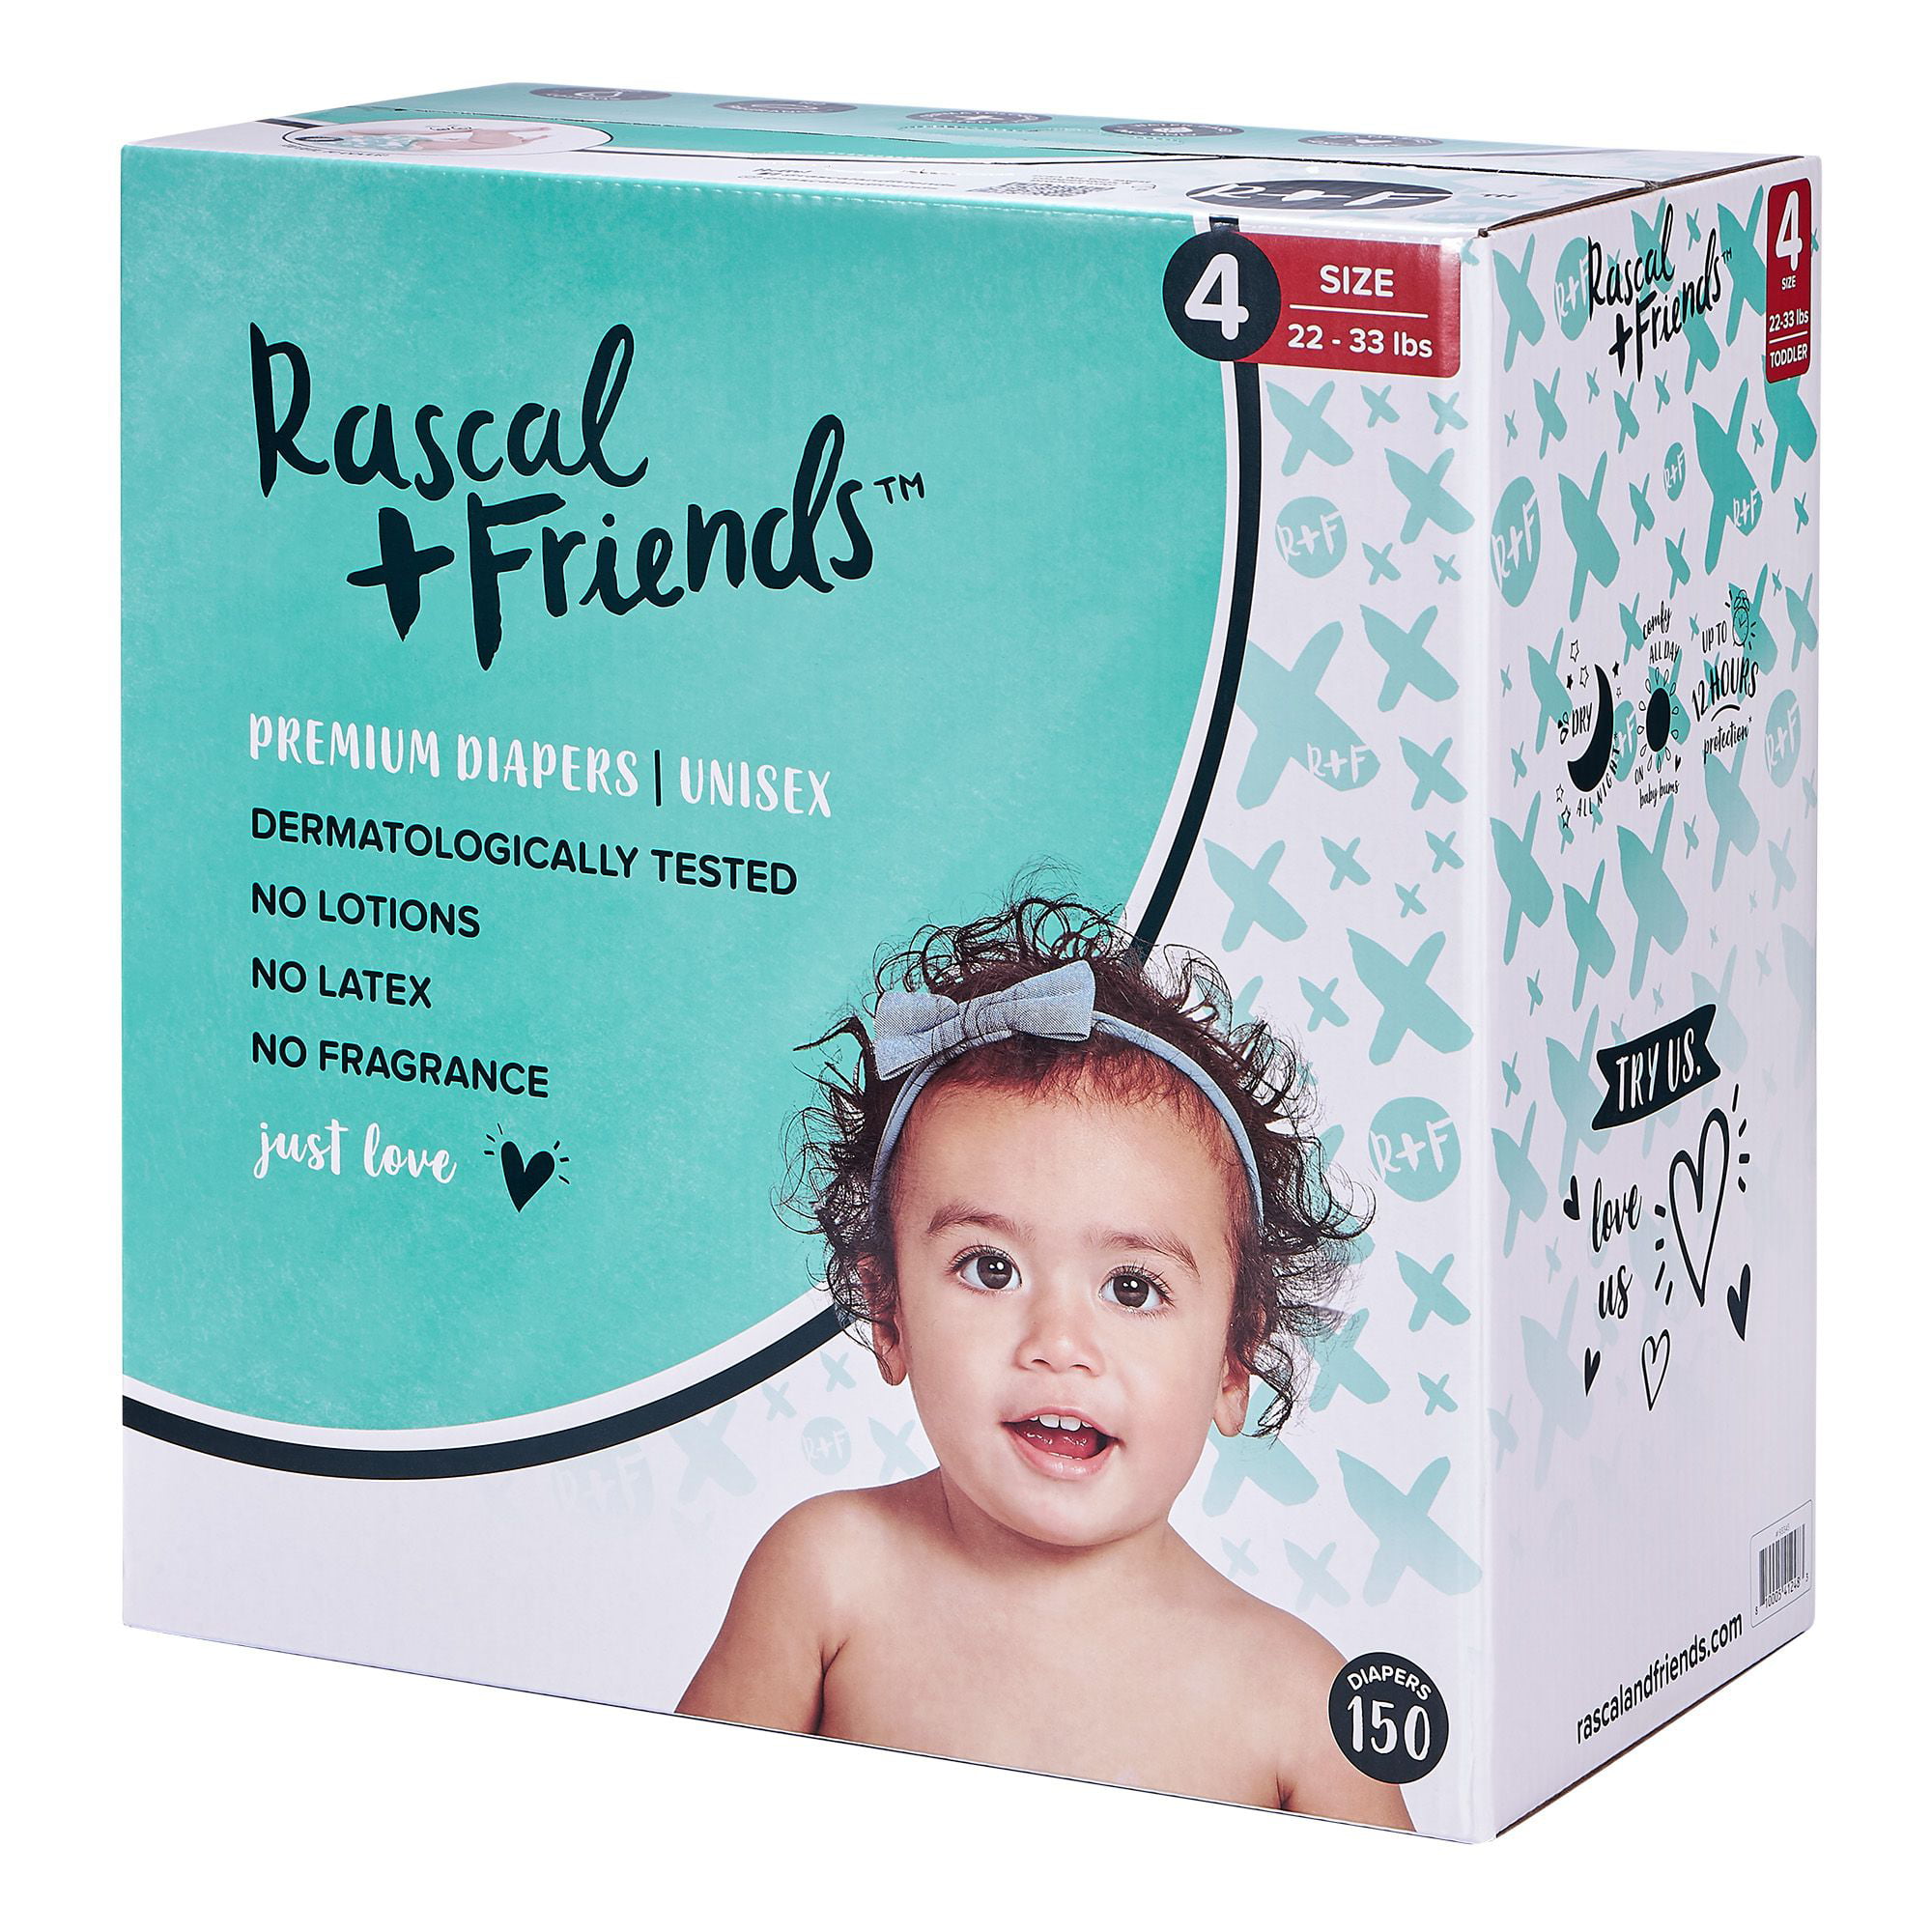 Rascal + Friends Premium Diapers, Size 